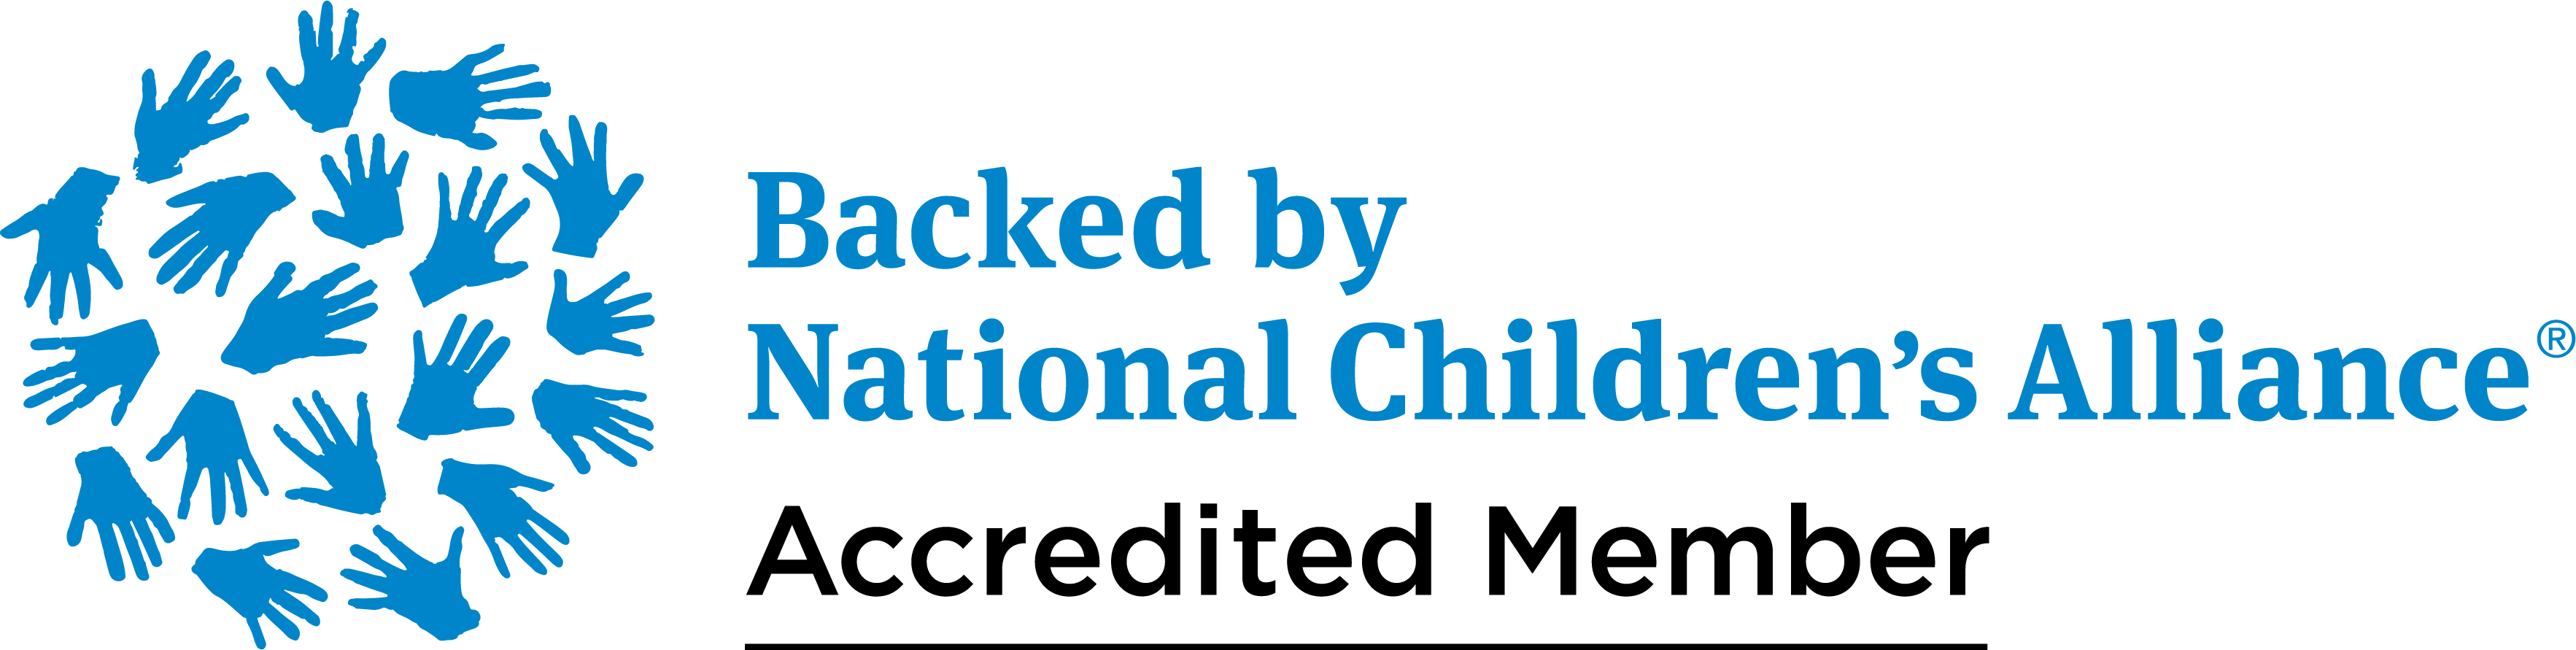 National Children’s Alliance